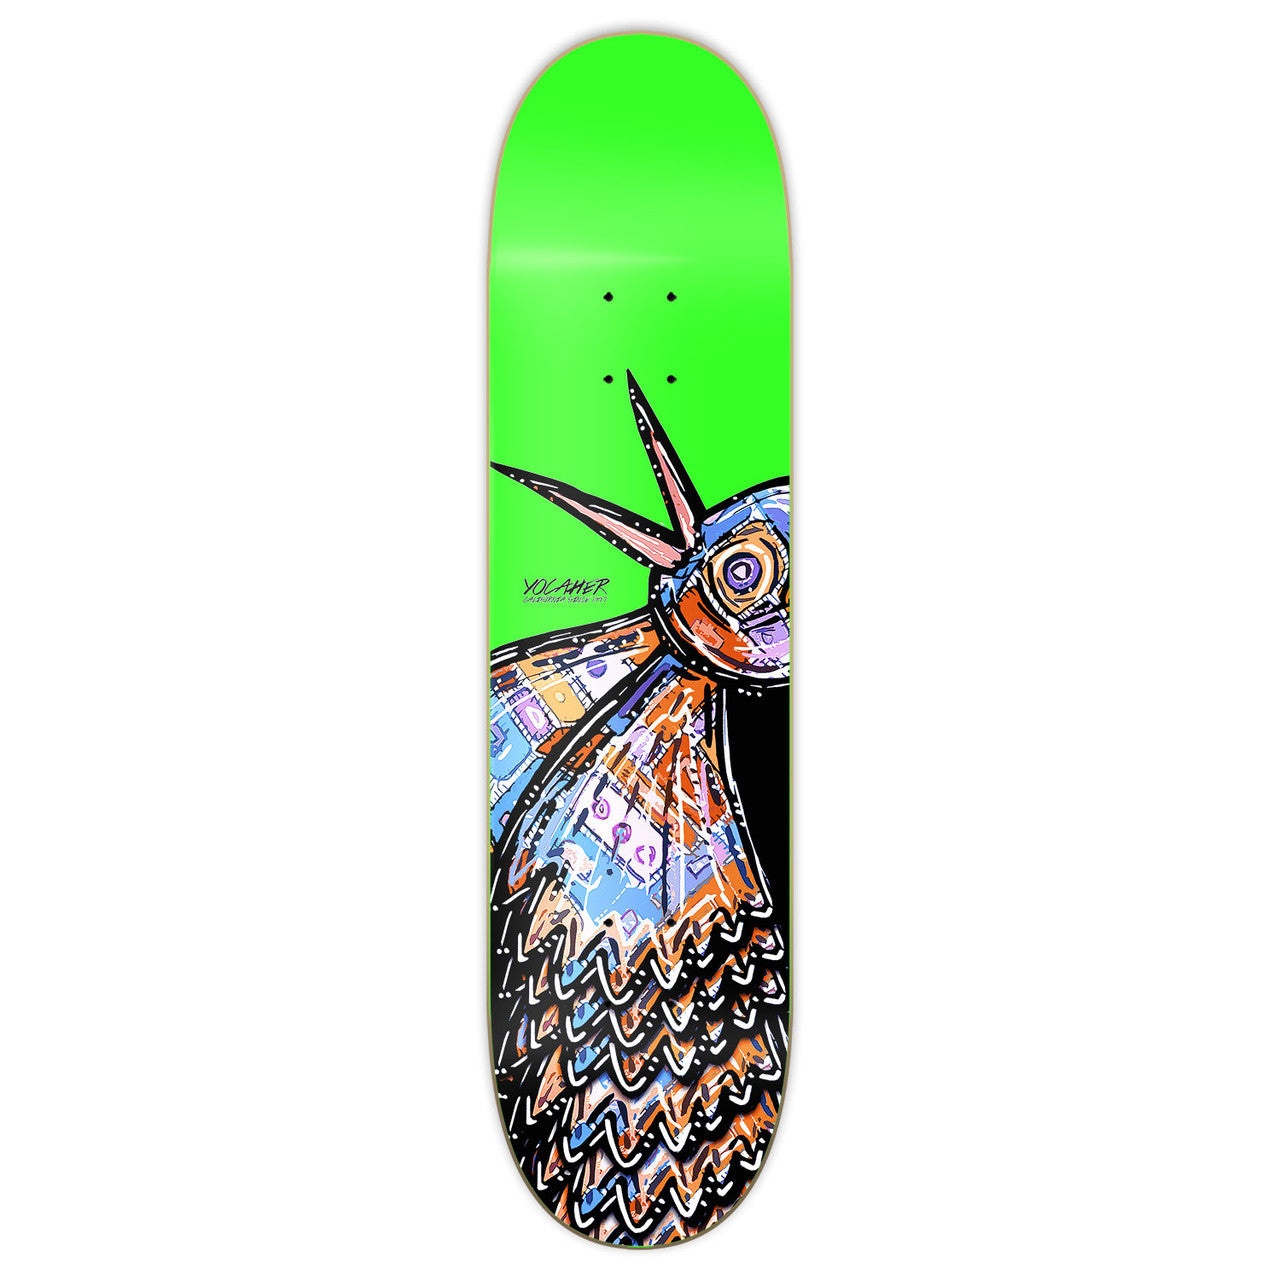 Graphic Skateboard Deck - The Bird Green